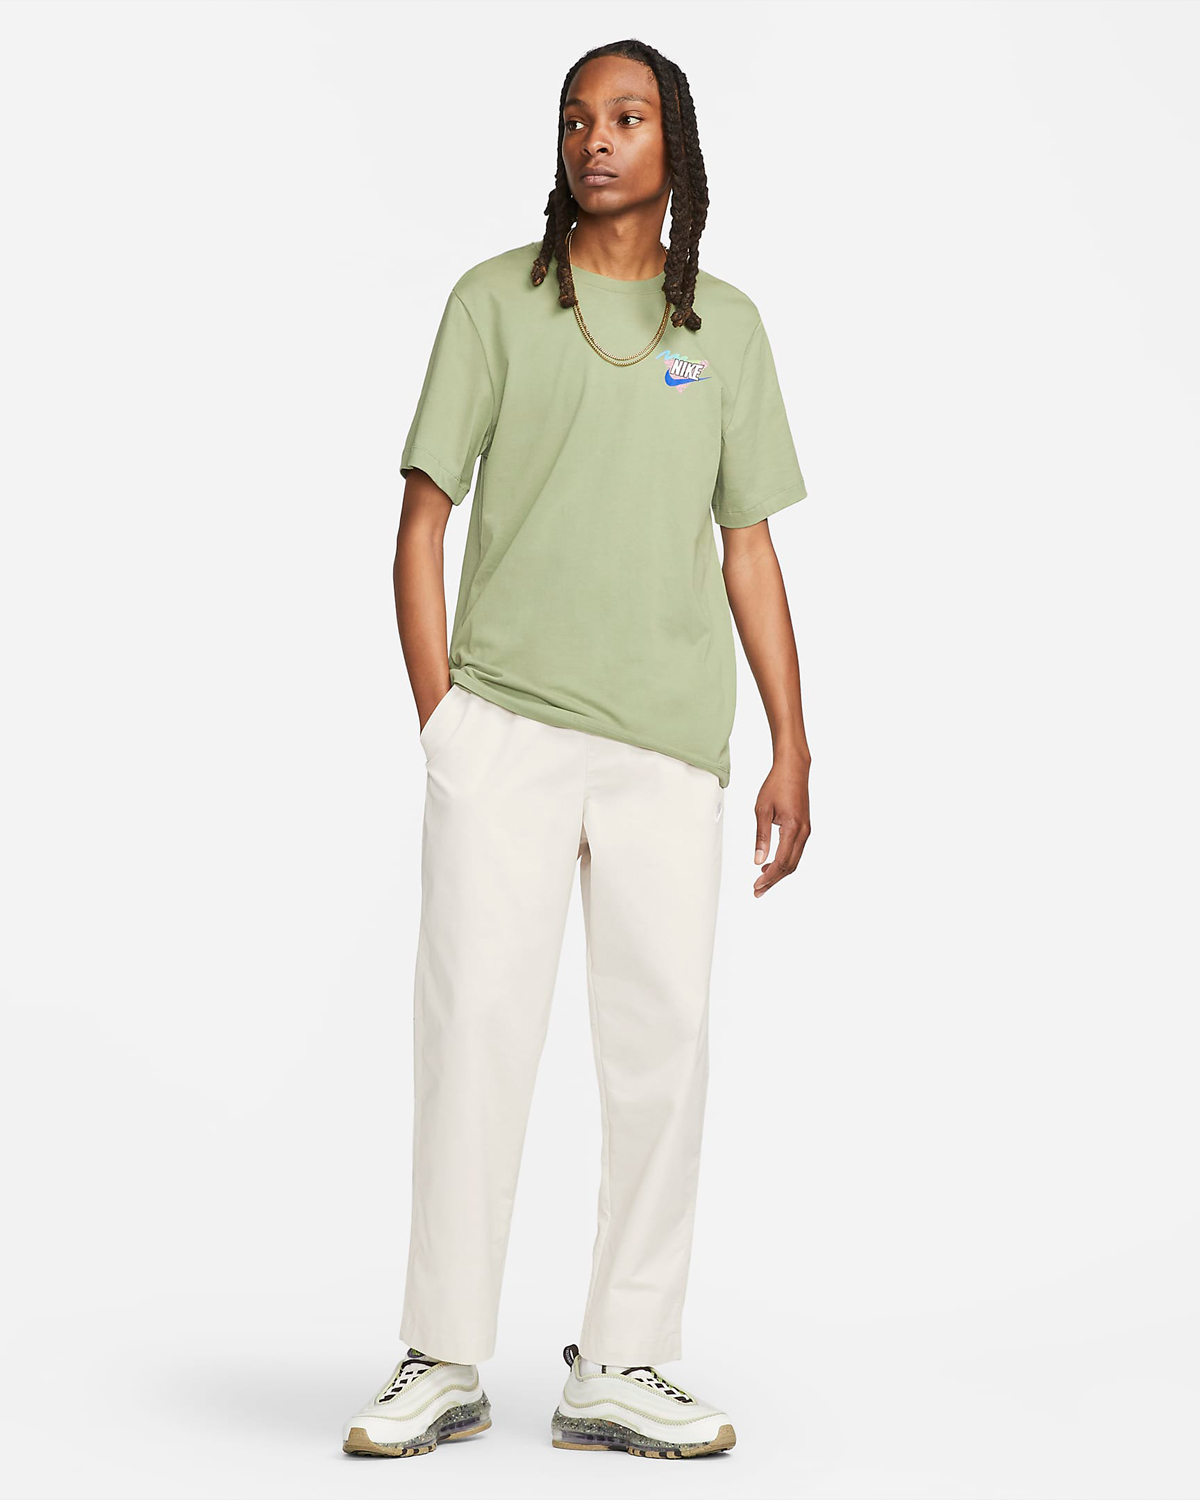 Nike-Sportswear-Summer-2023-T-Shirt-Oil-Green-Outfit